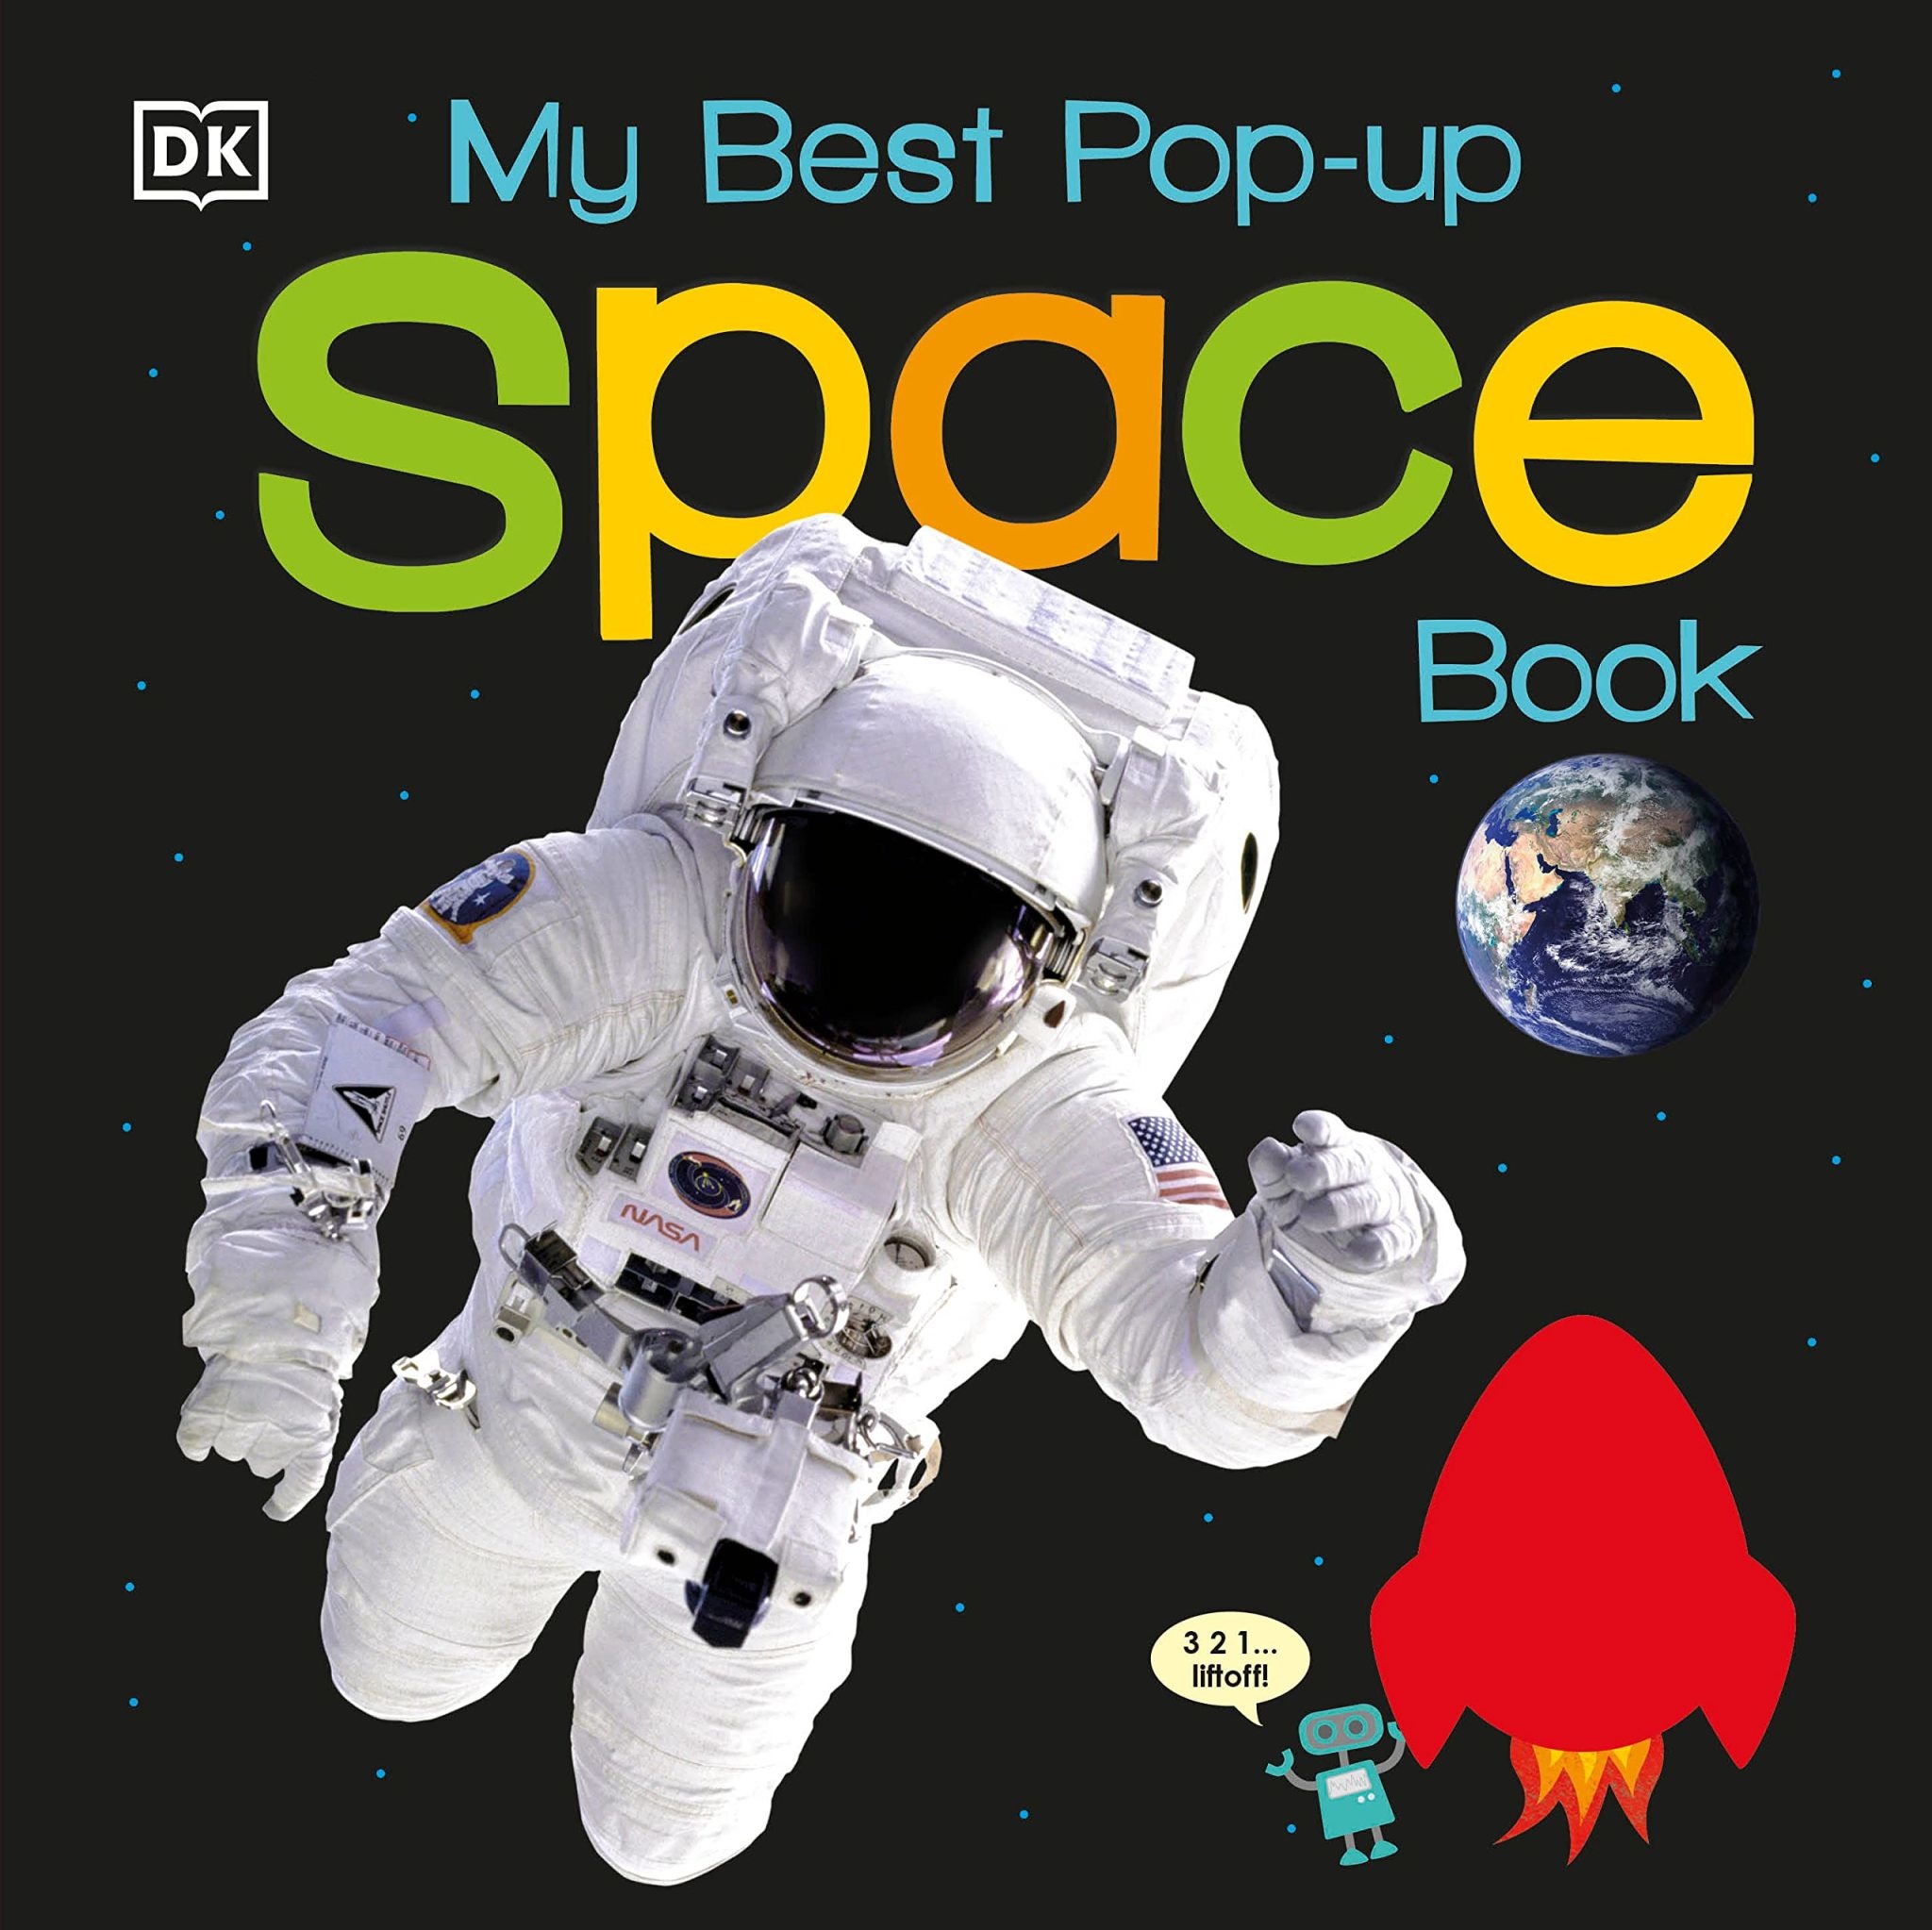 My Best Pop-up SPACE book - Planewear